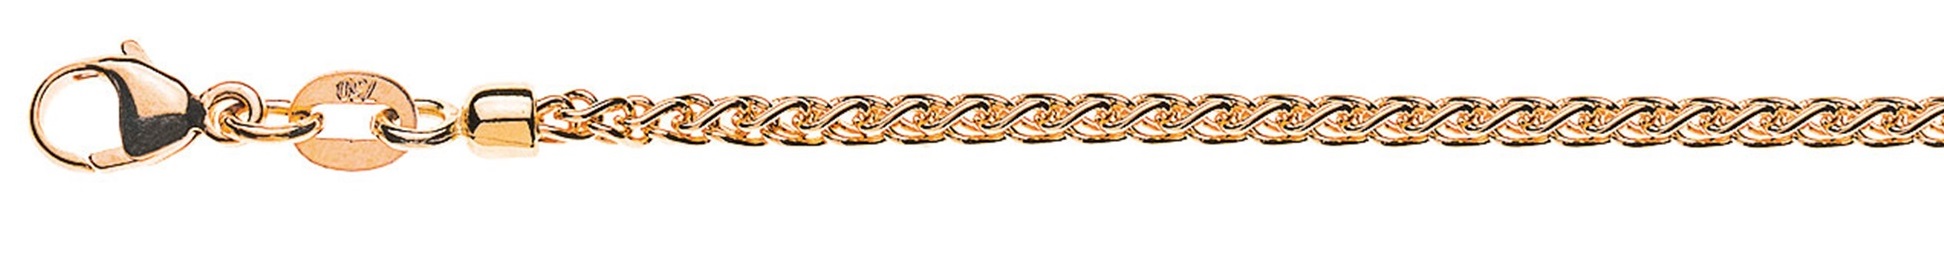 AURONOS Prestige Collier chaîne en or rose 18K 50cm 2.15mm